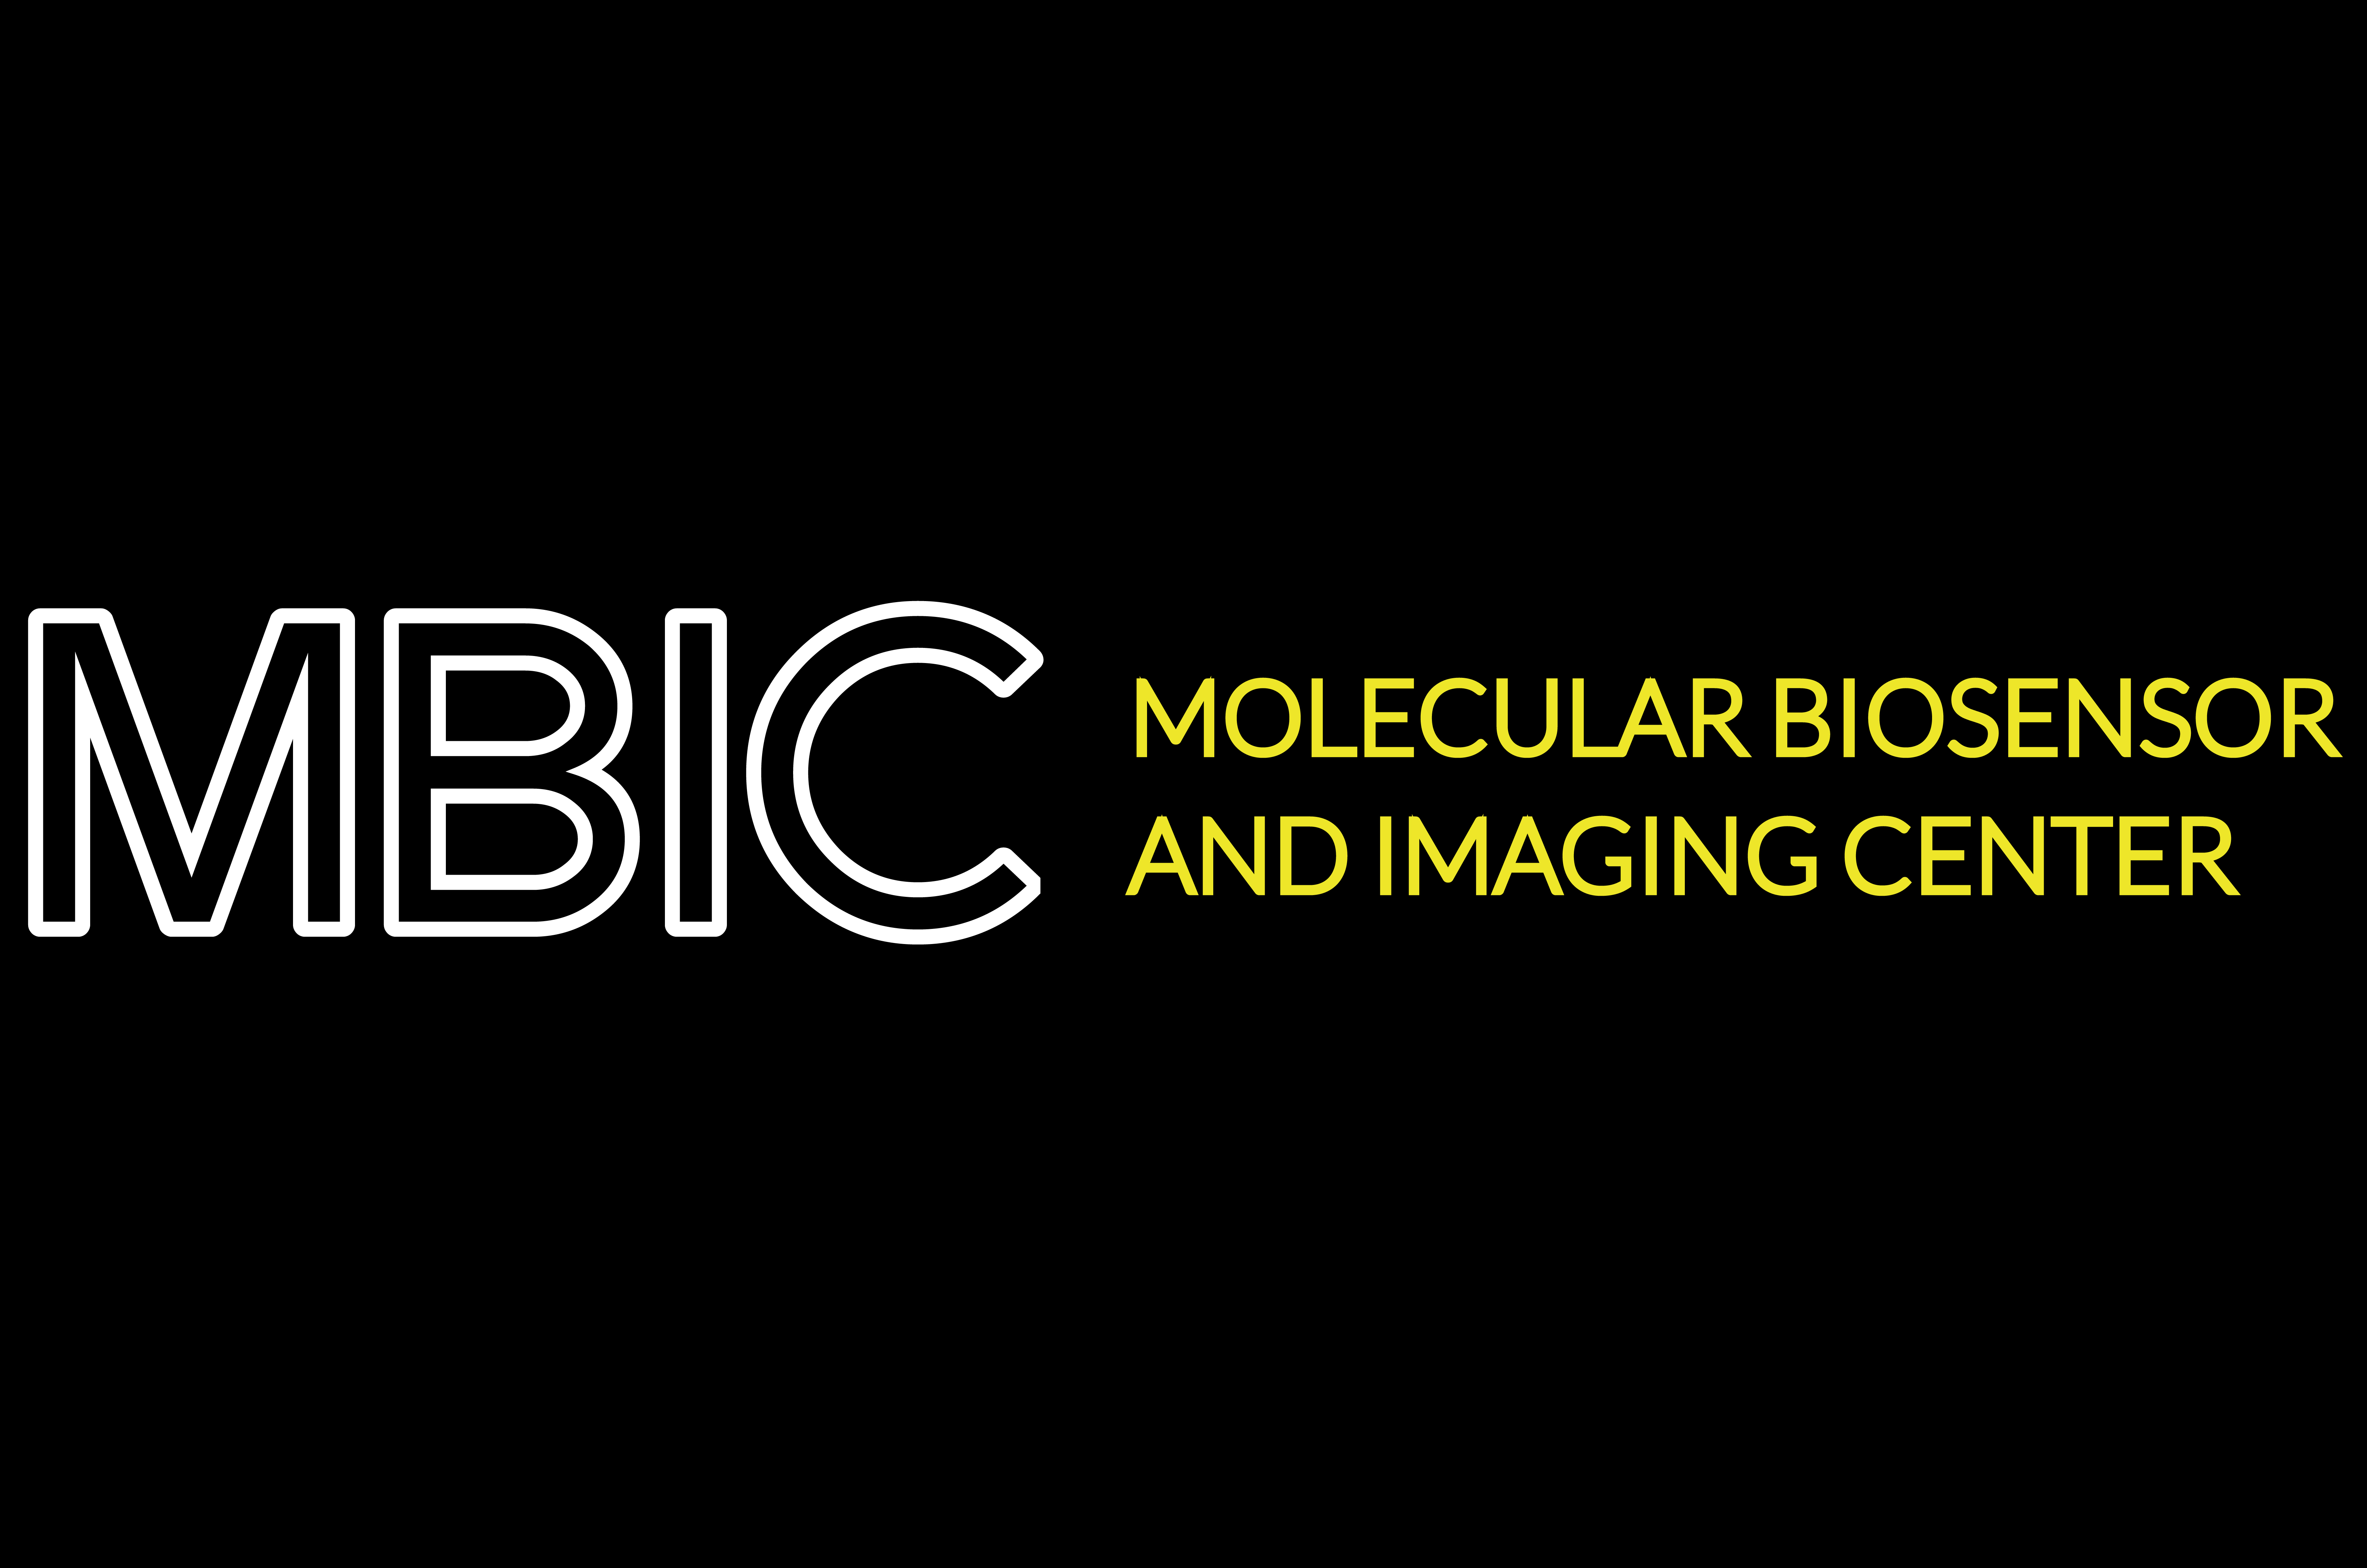 Thumbnail photo: The Molecular Biosensor and Imaging Center